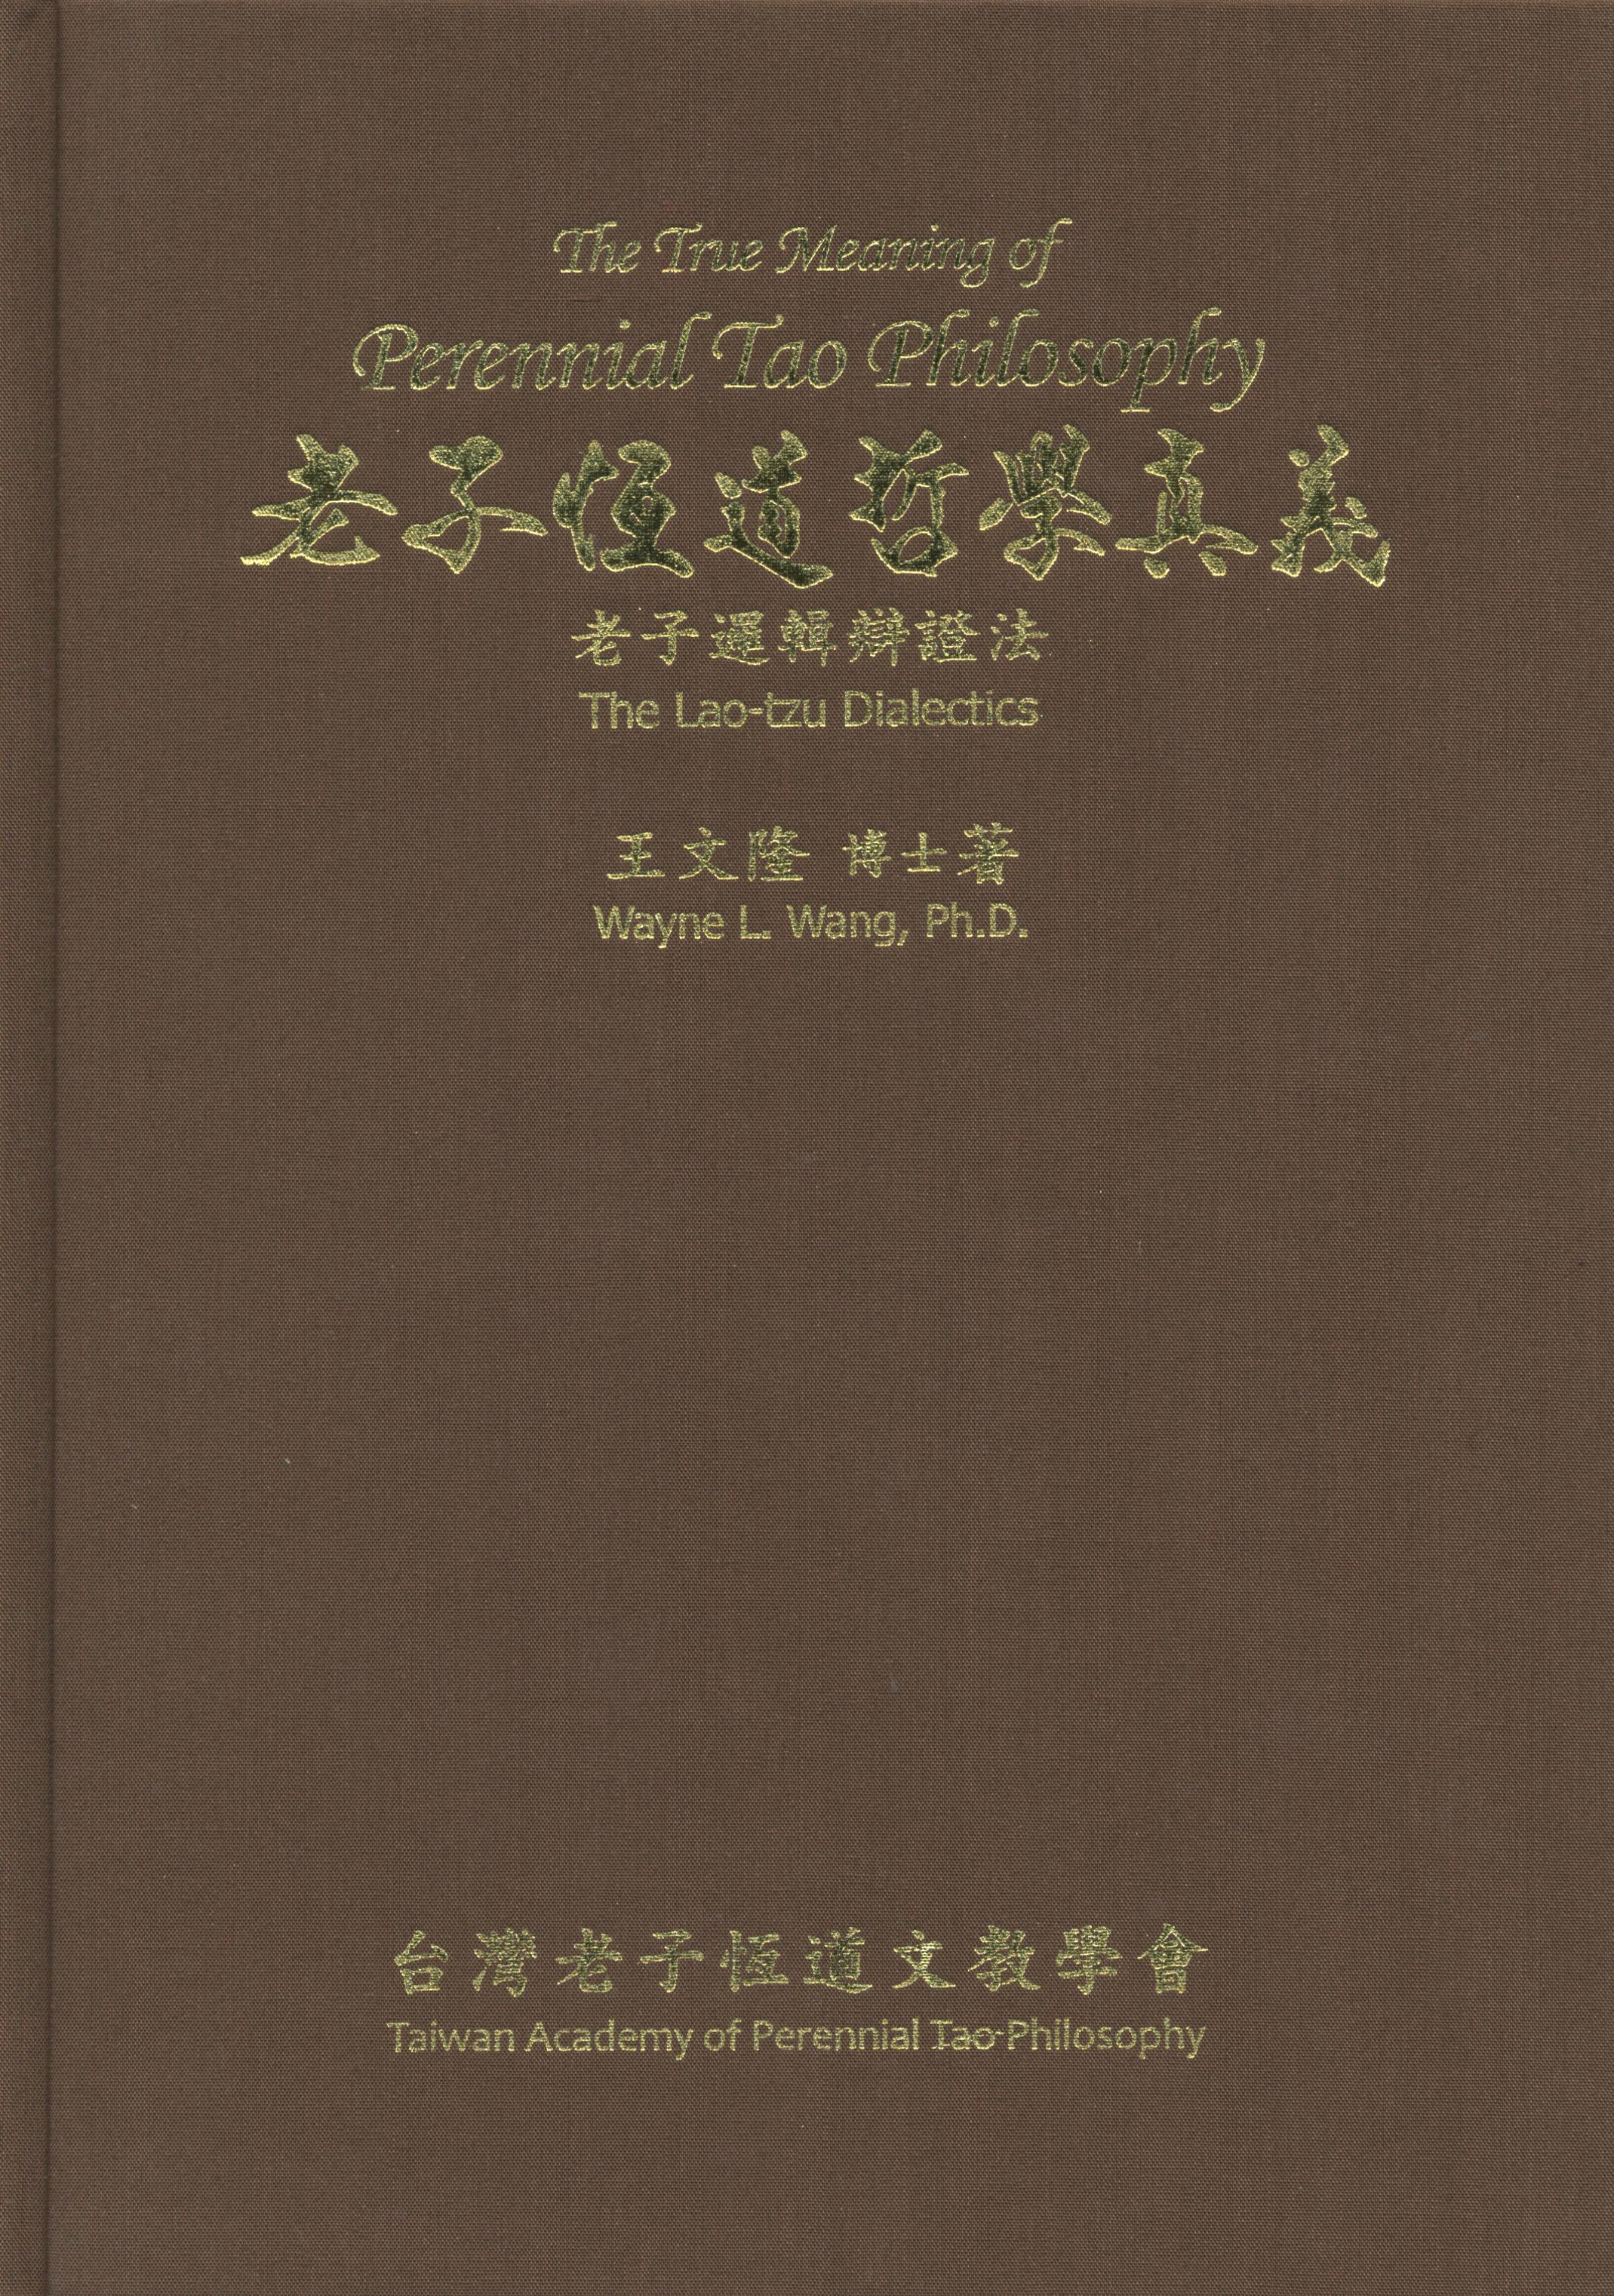 1278. The True Meaning of Perennial Tao Philosophy/Wayne L. Wang